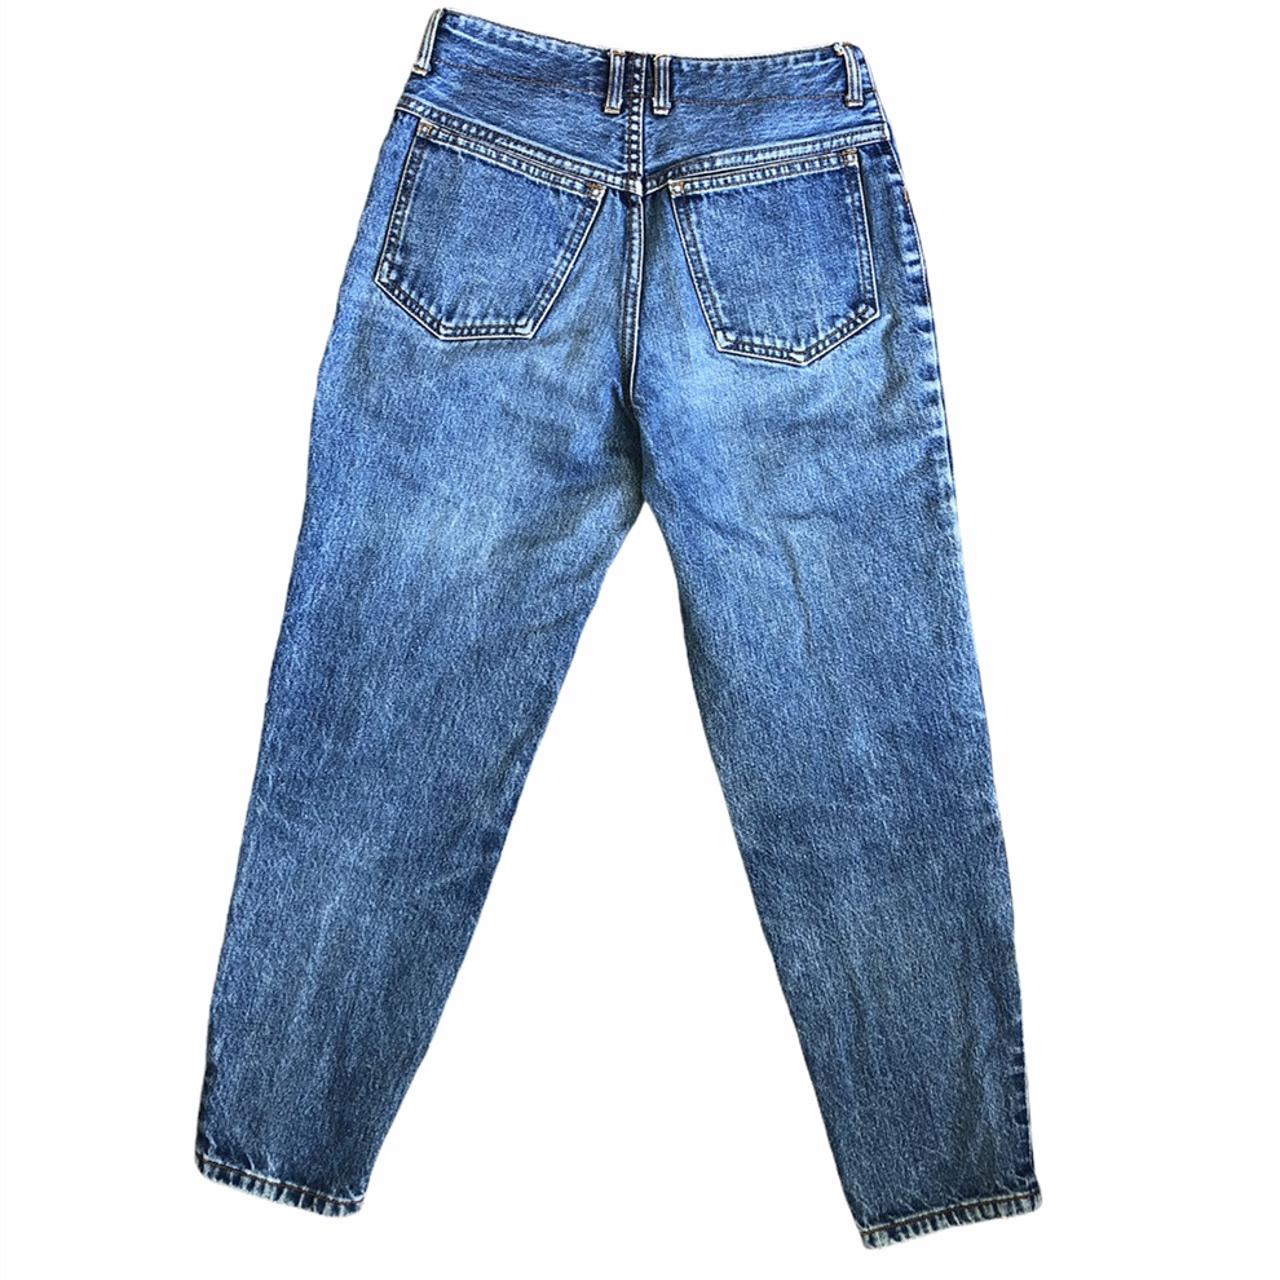 Vintage 90s high waited blue jeans 🐬 Amazing... - Depop